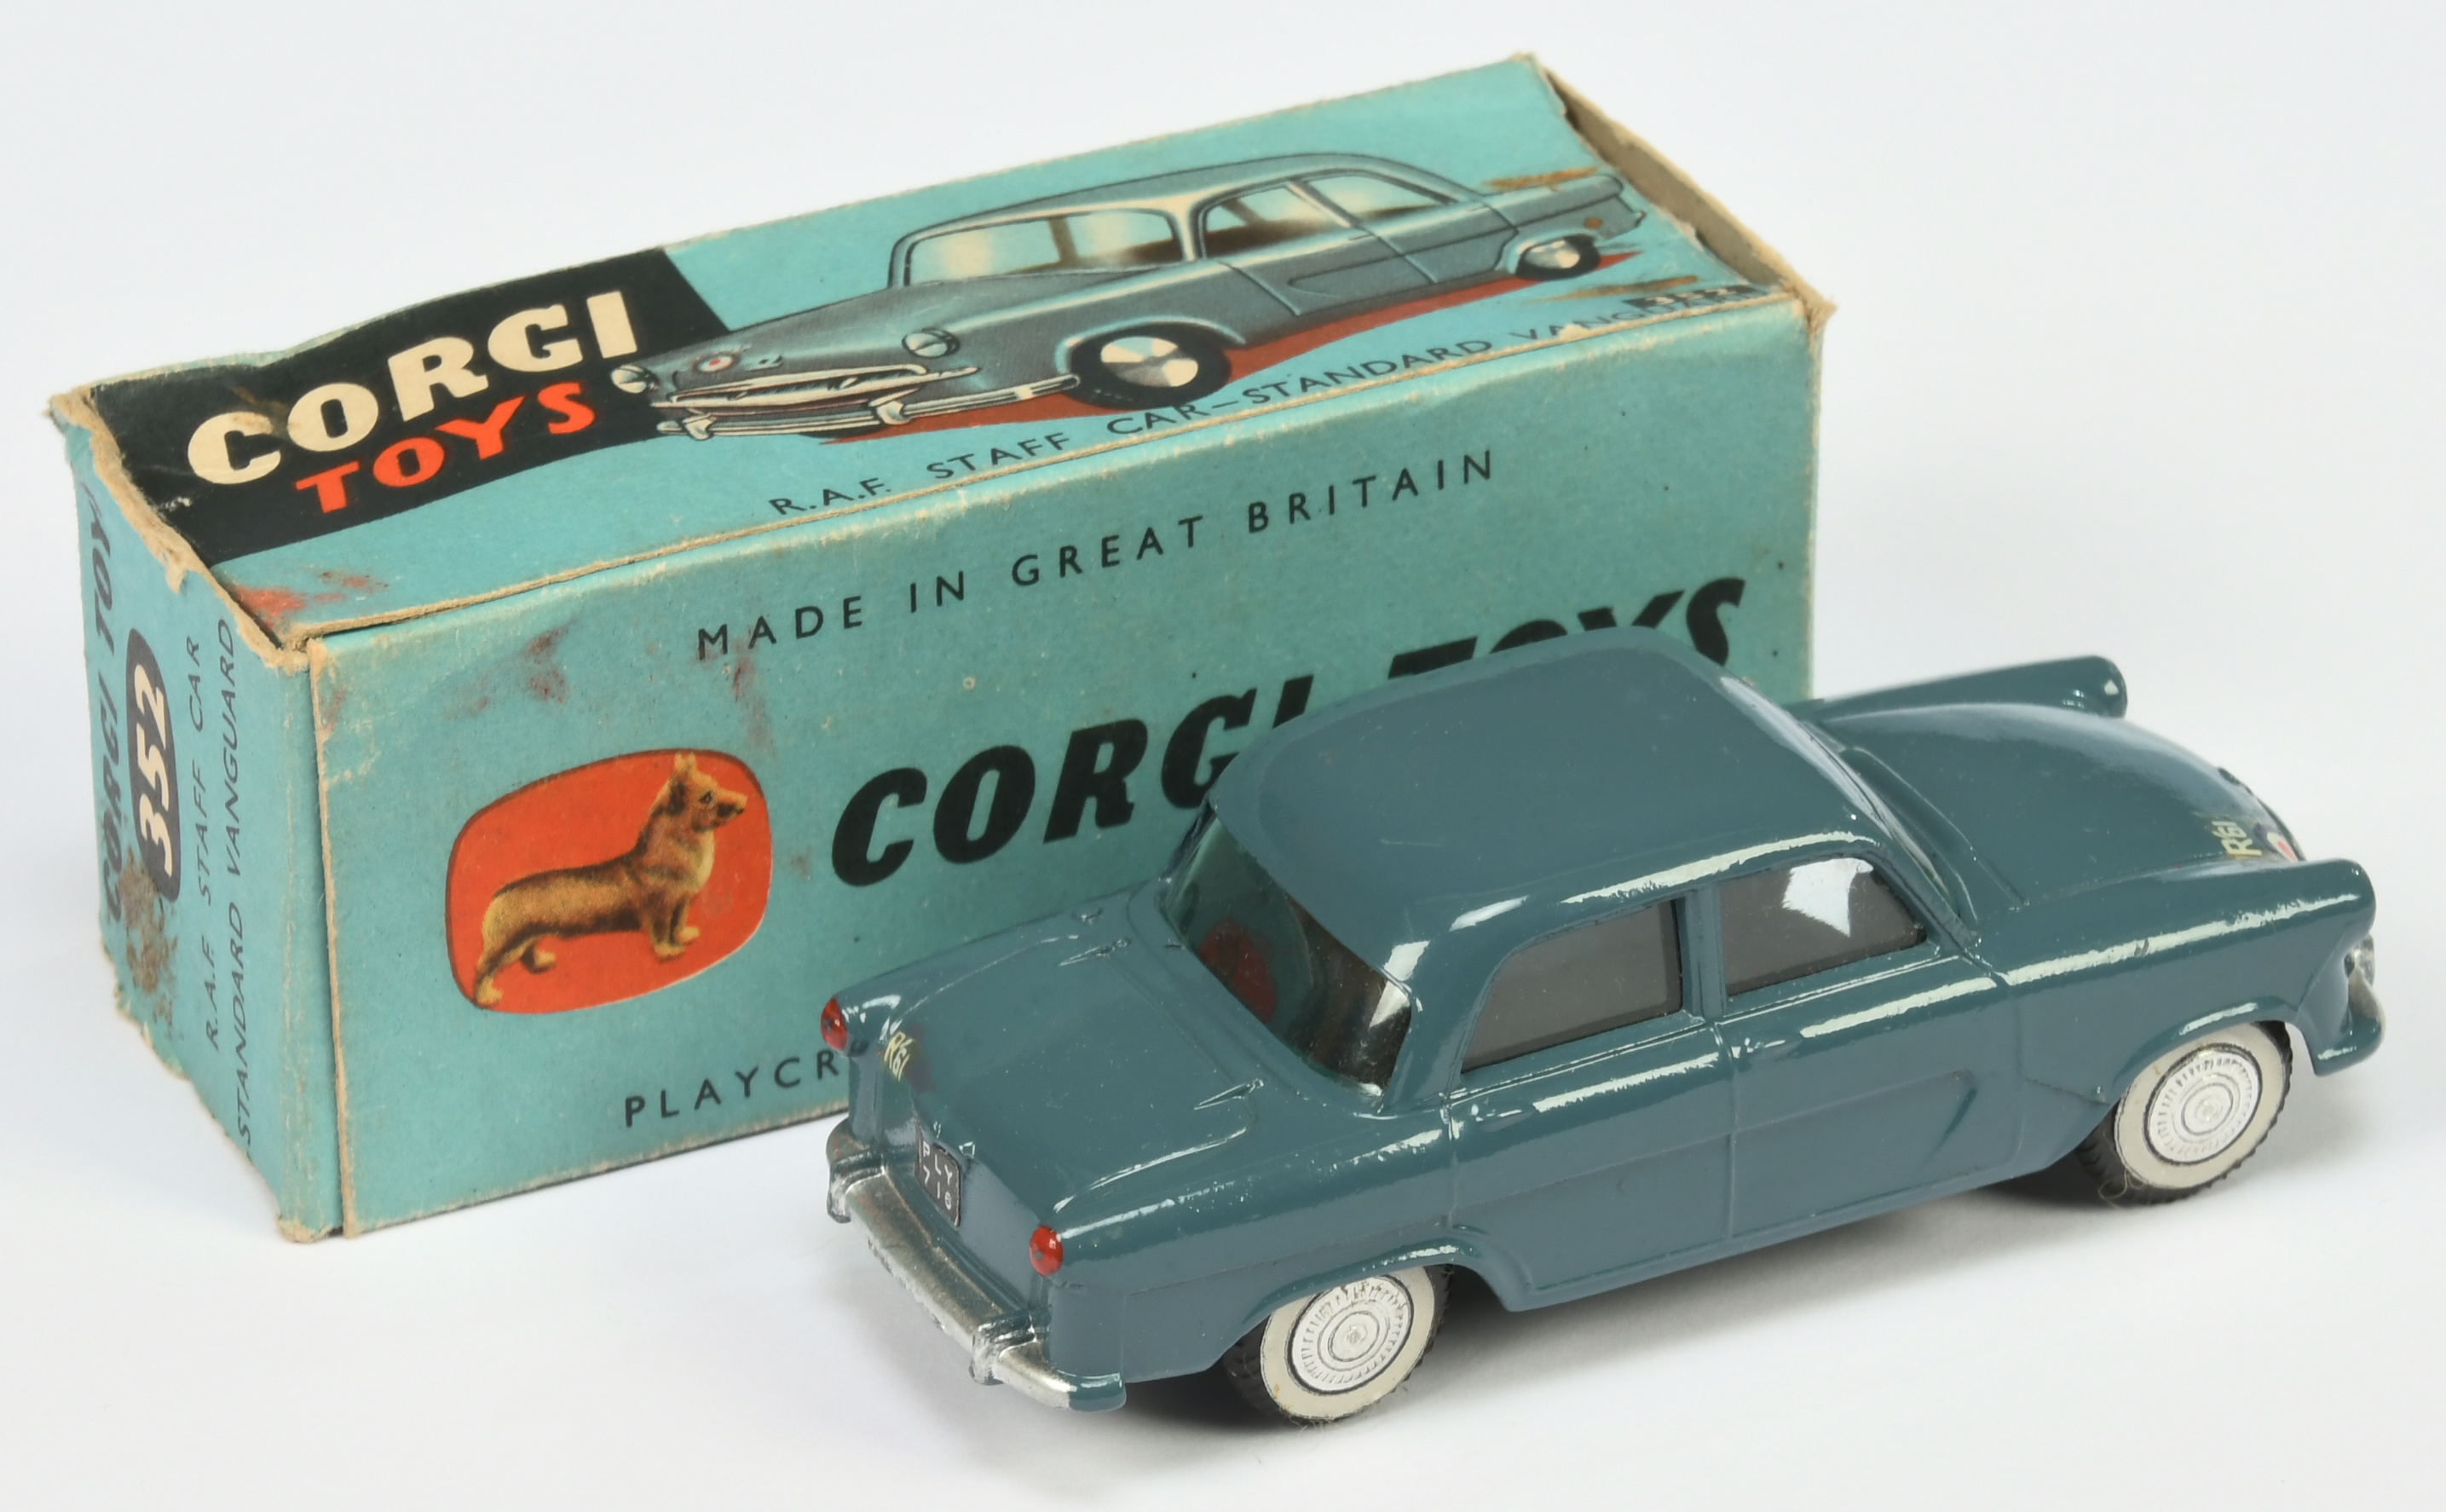 Corgi Toys 352 Standard Vanguard "RAF" Car - Greyish-blue, silver trim, flat spun hubs (Accessory... - Bild 2 aus 2